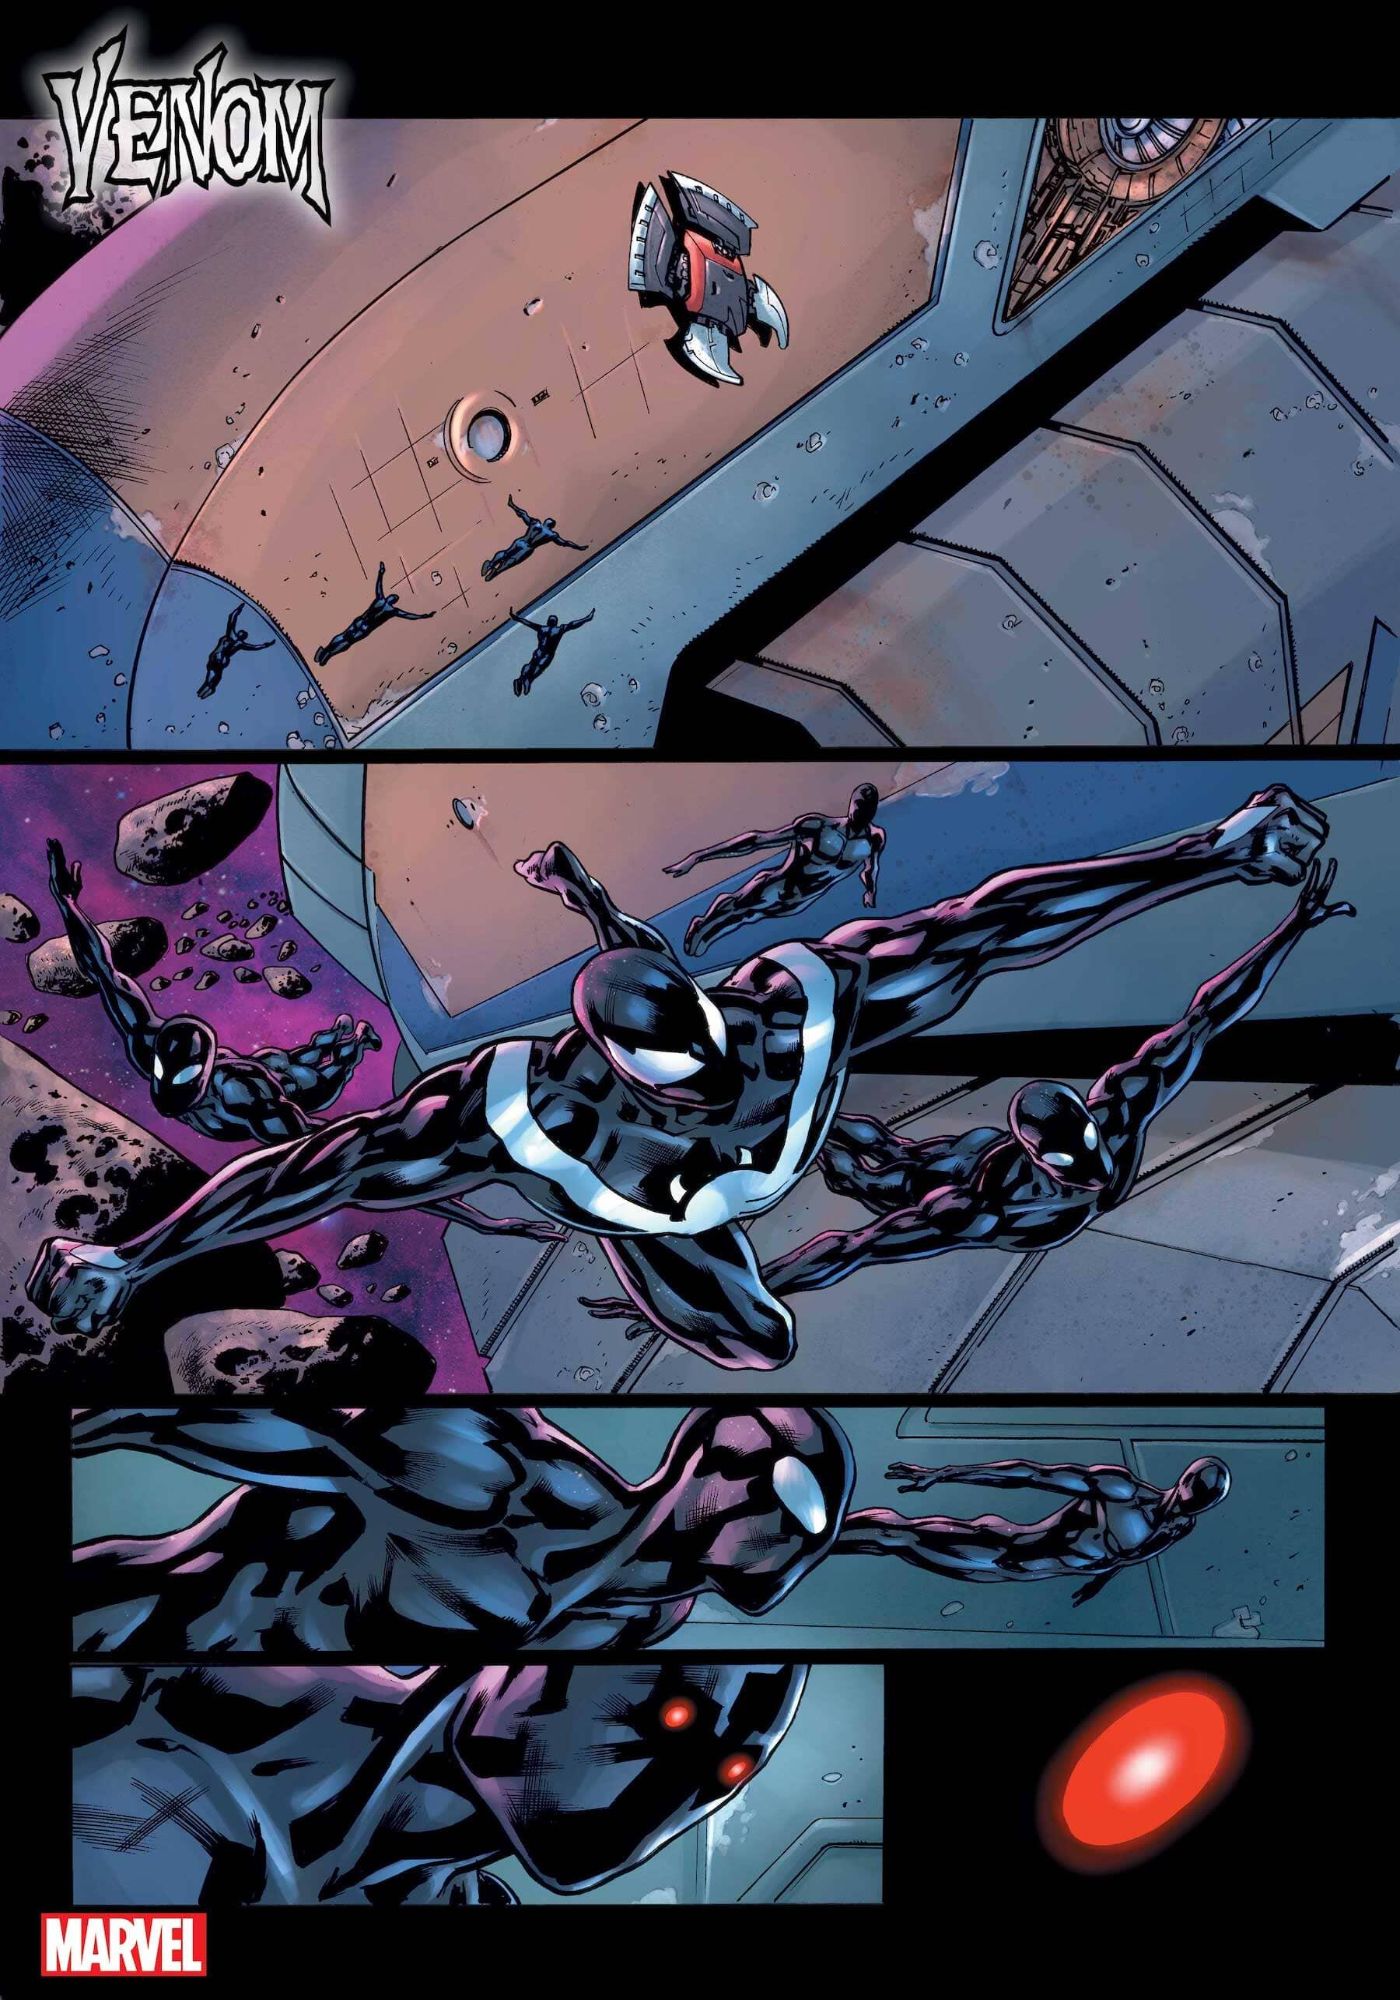 Marvels New Venom Also Has A Classic SpiderMan Problem